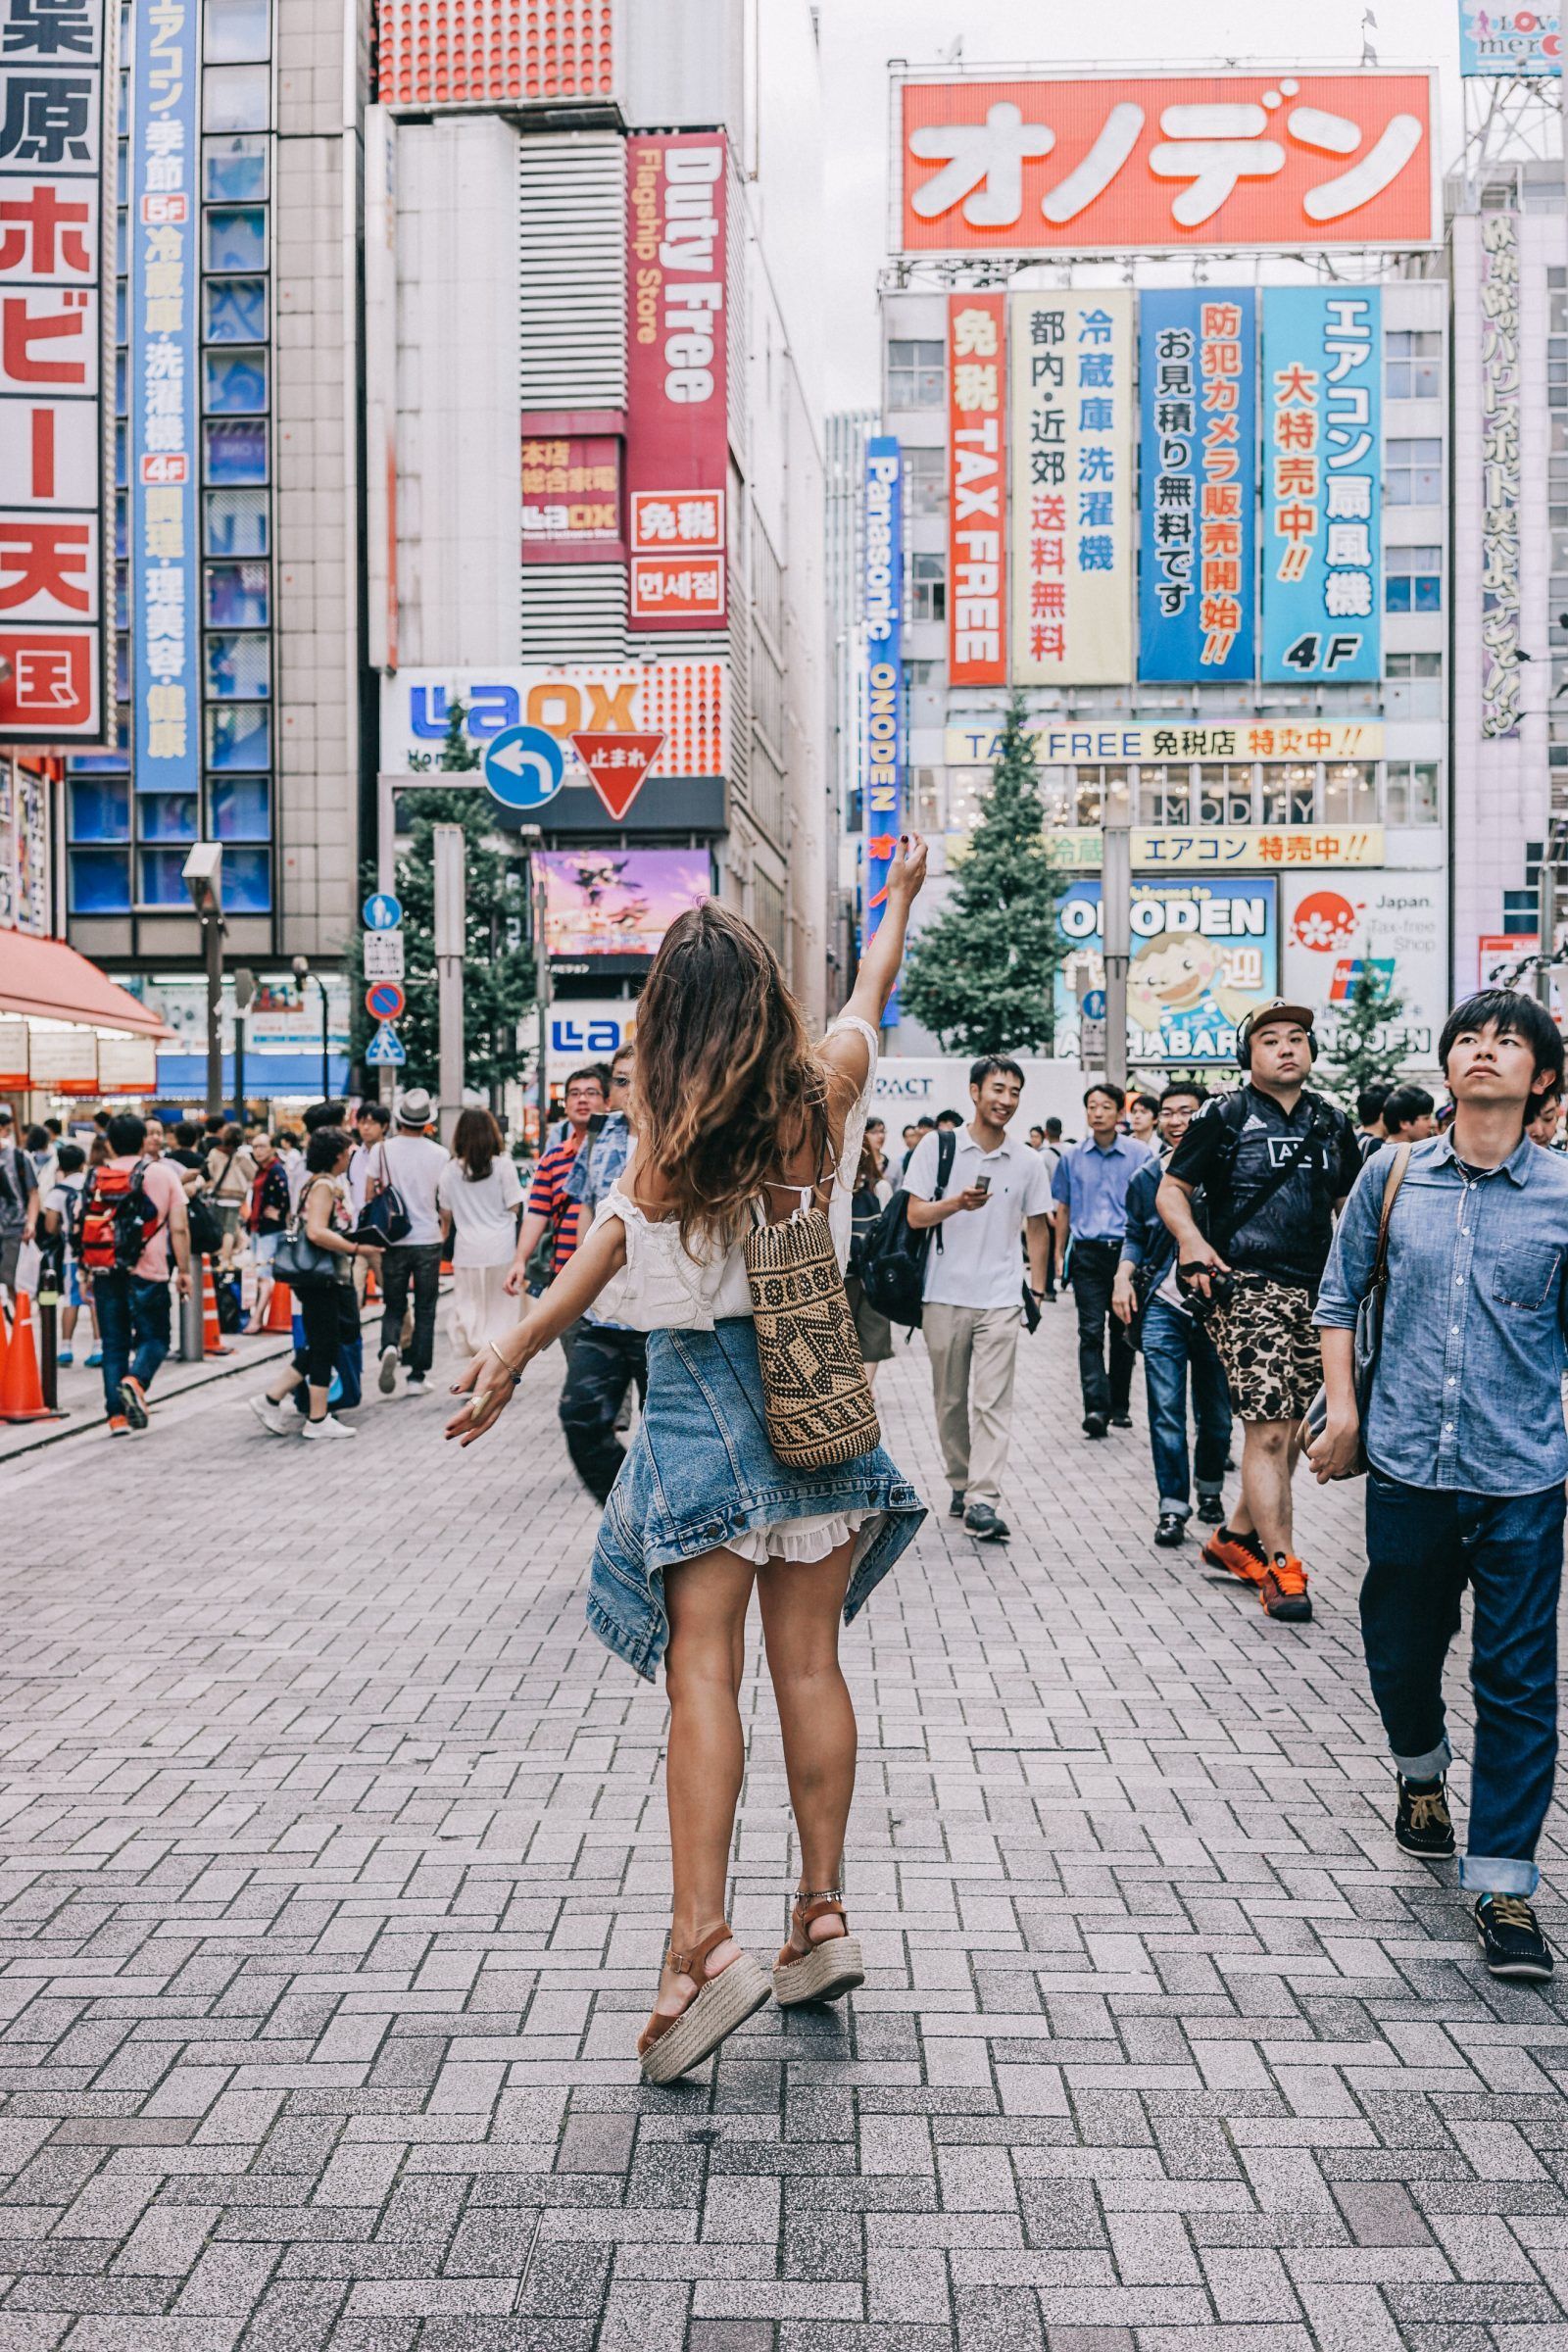 Woman on busy street in Tokyo